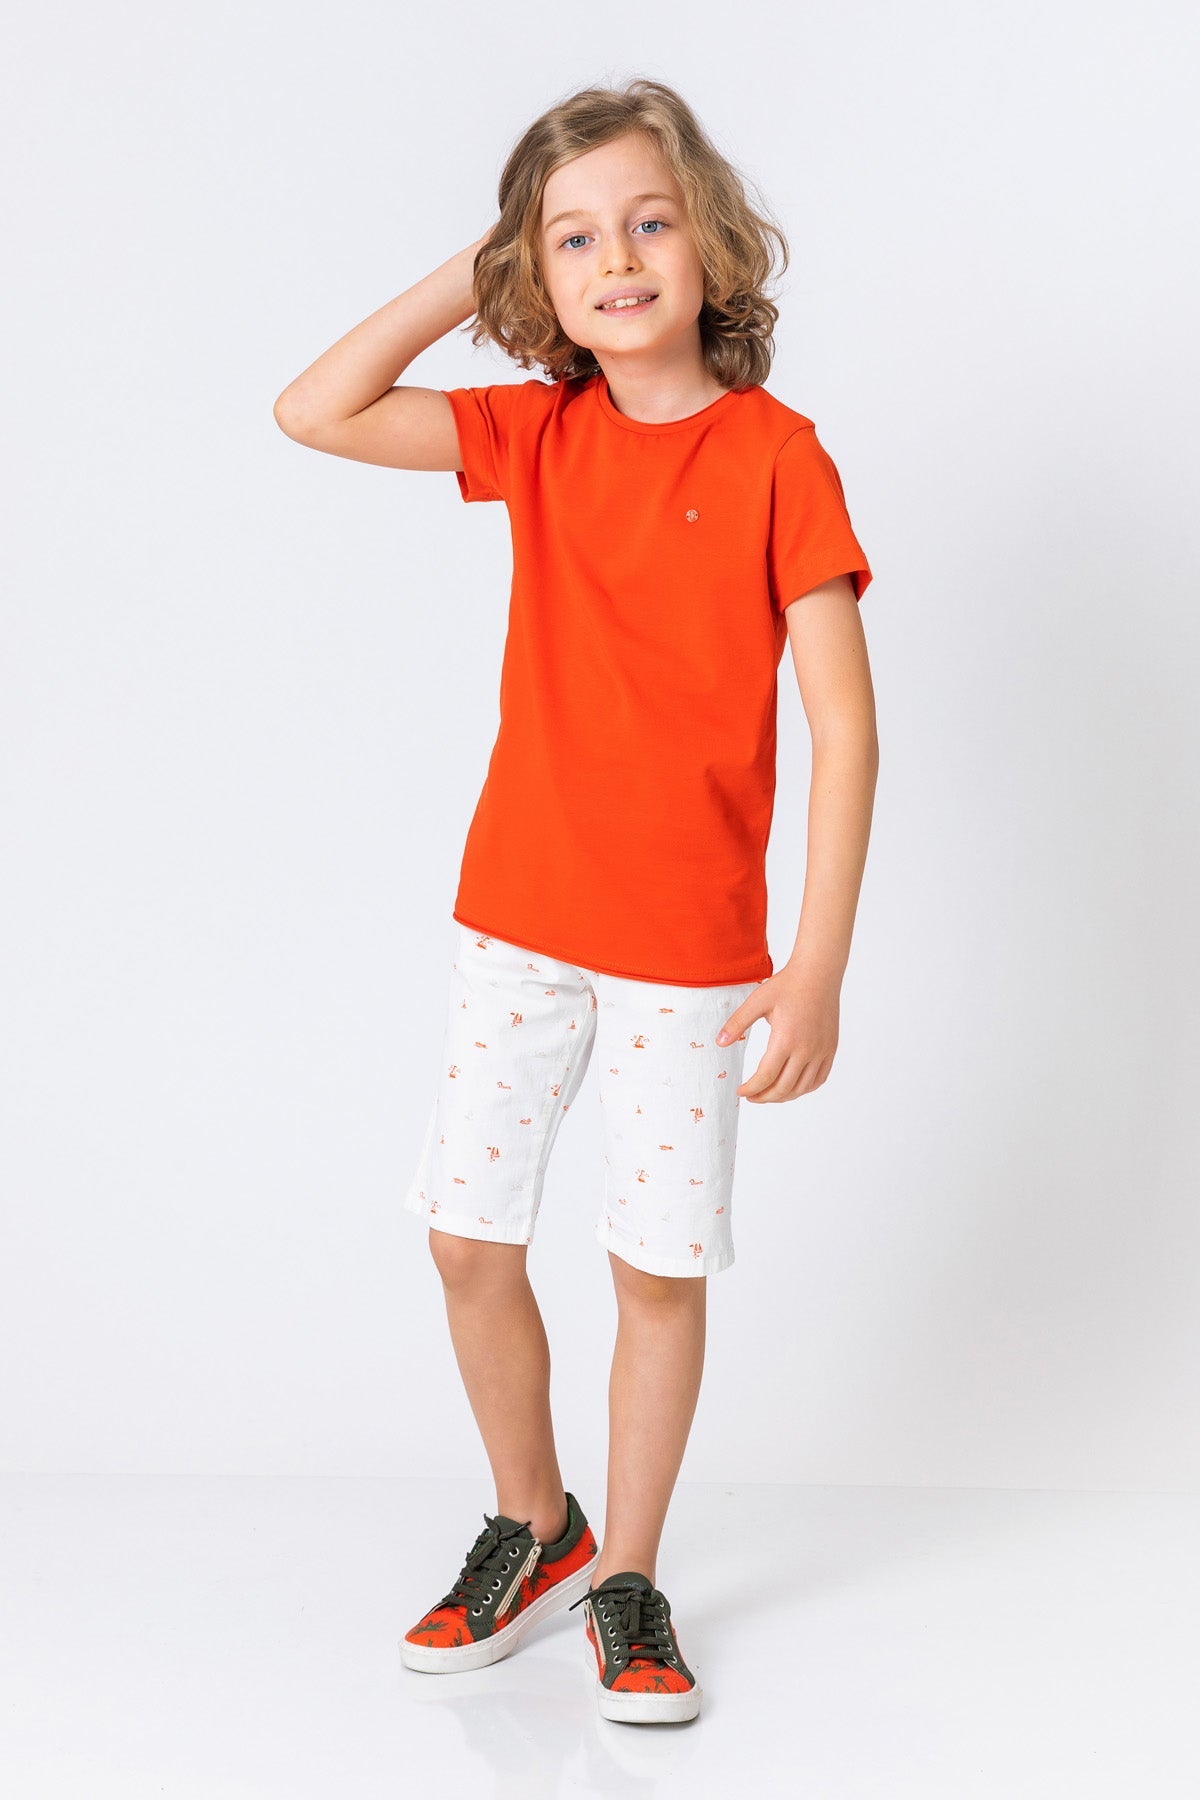 Neck Round Plain Solid Short Boys Basic InCity Kids T-Shirt Sleeve